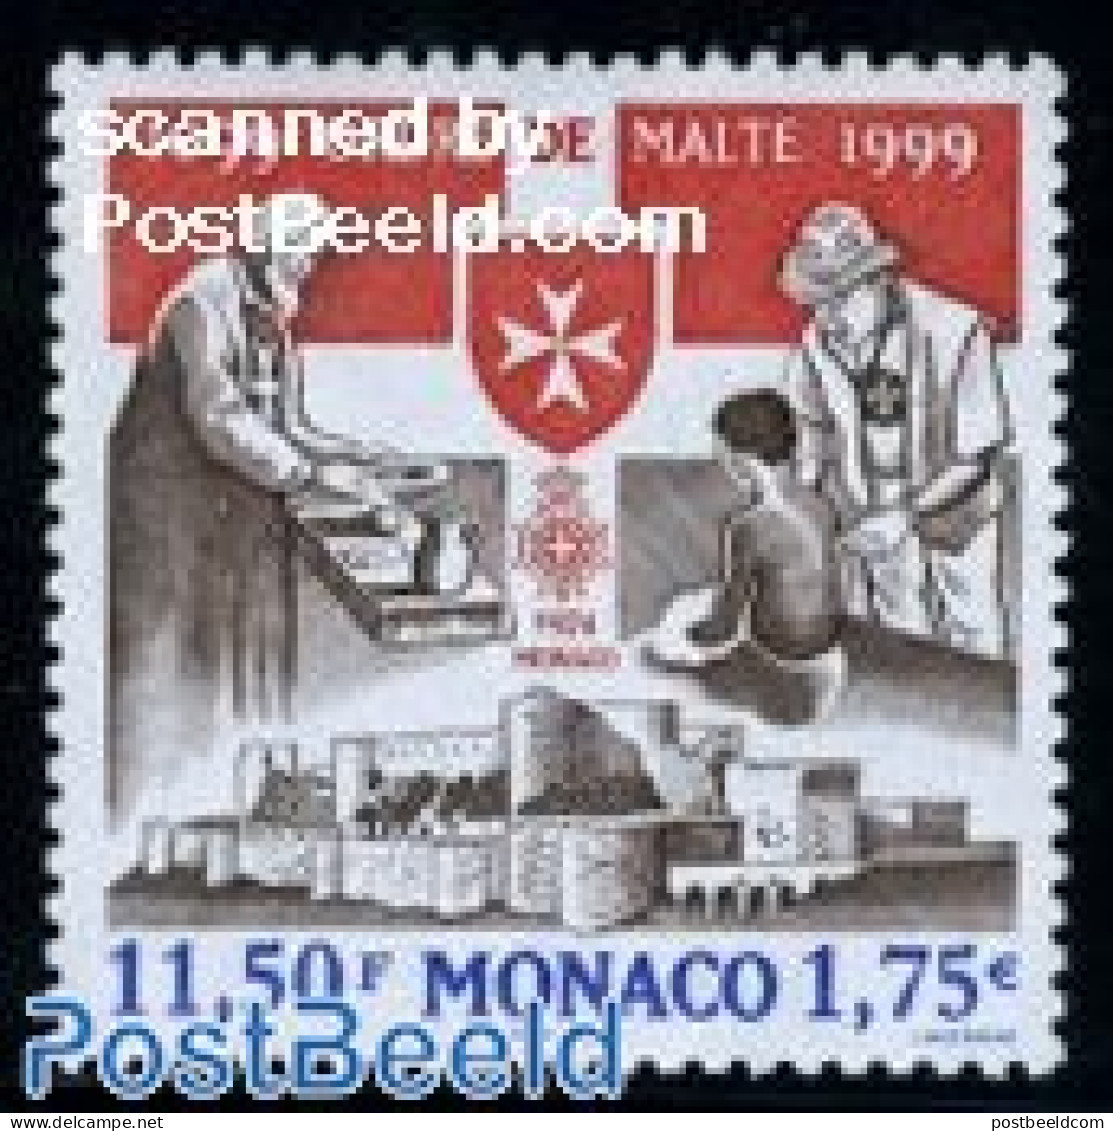 Monaco 1999 Malteser Order 1v, Mint NH, Health - St John - Ungebraucht